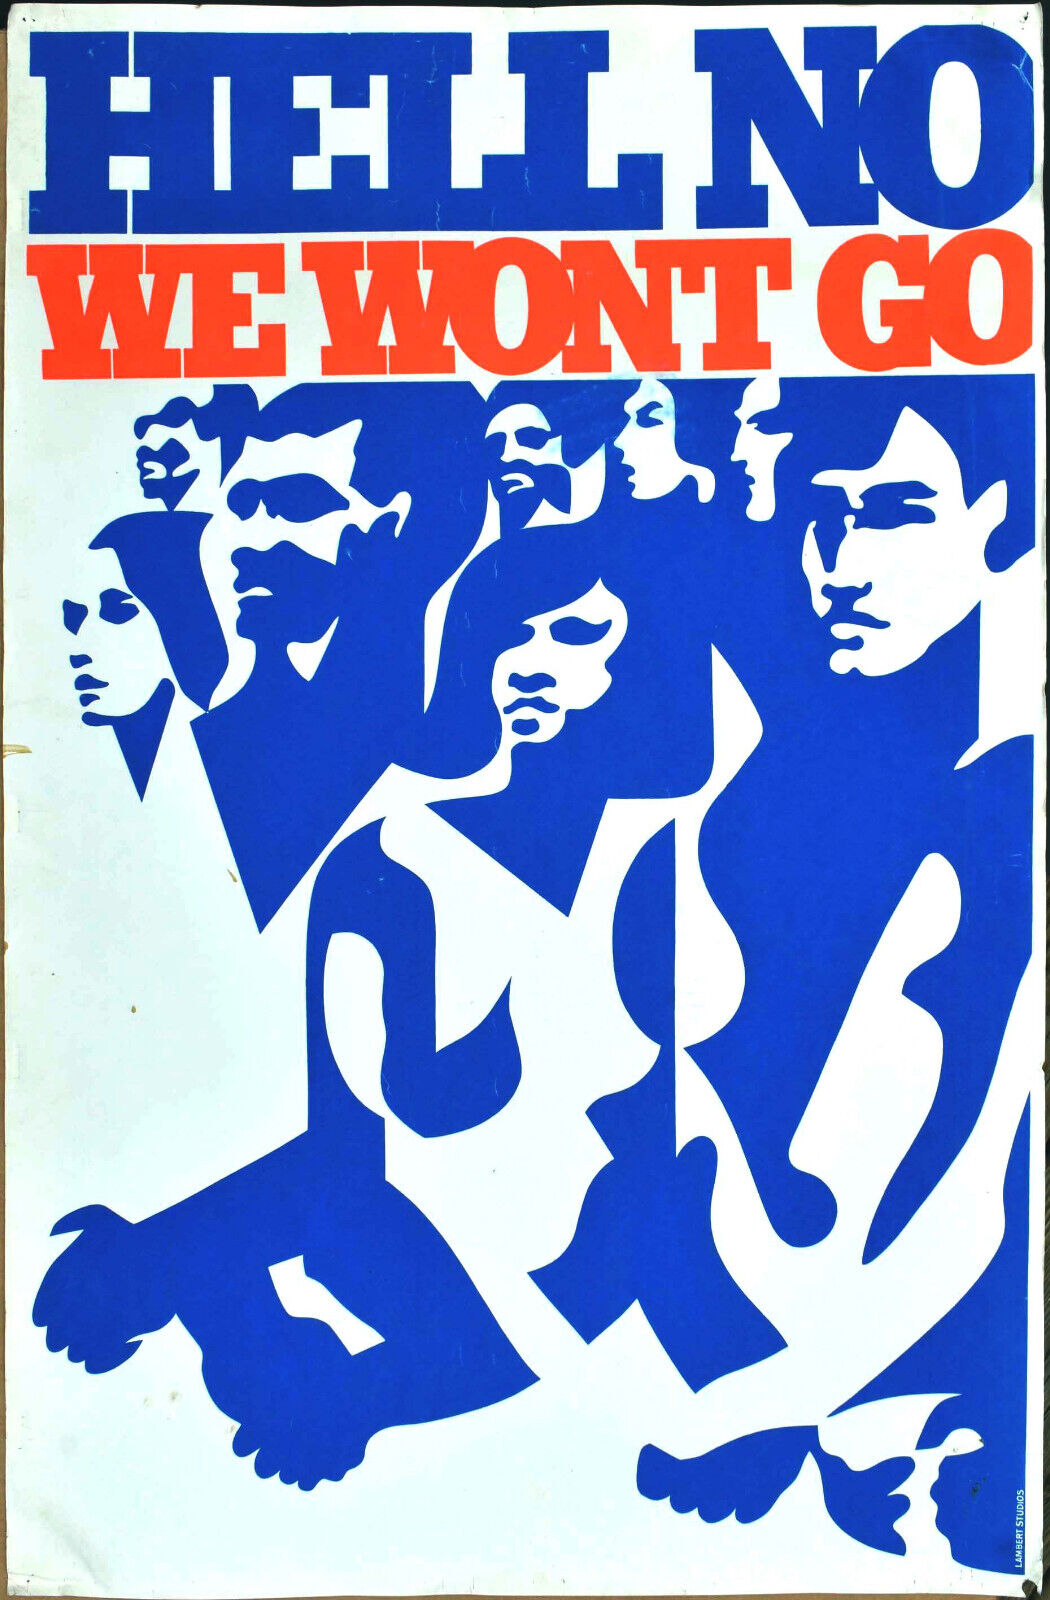 RARE Original Vintage 1967 - Vietnam Protest Poster “Hell No, We Won’t Go” - Big